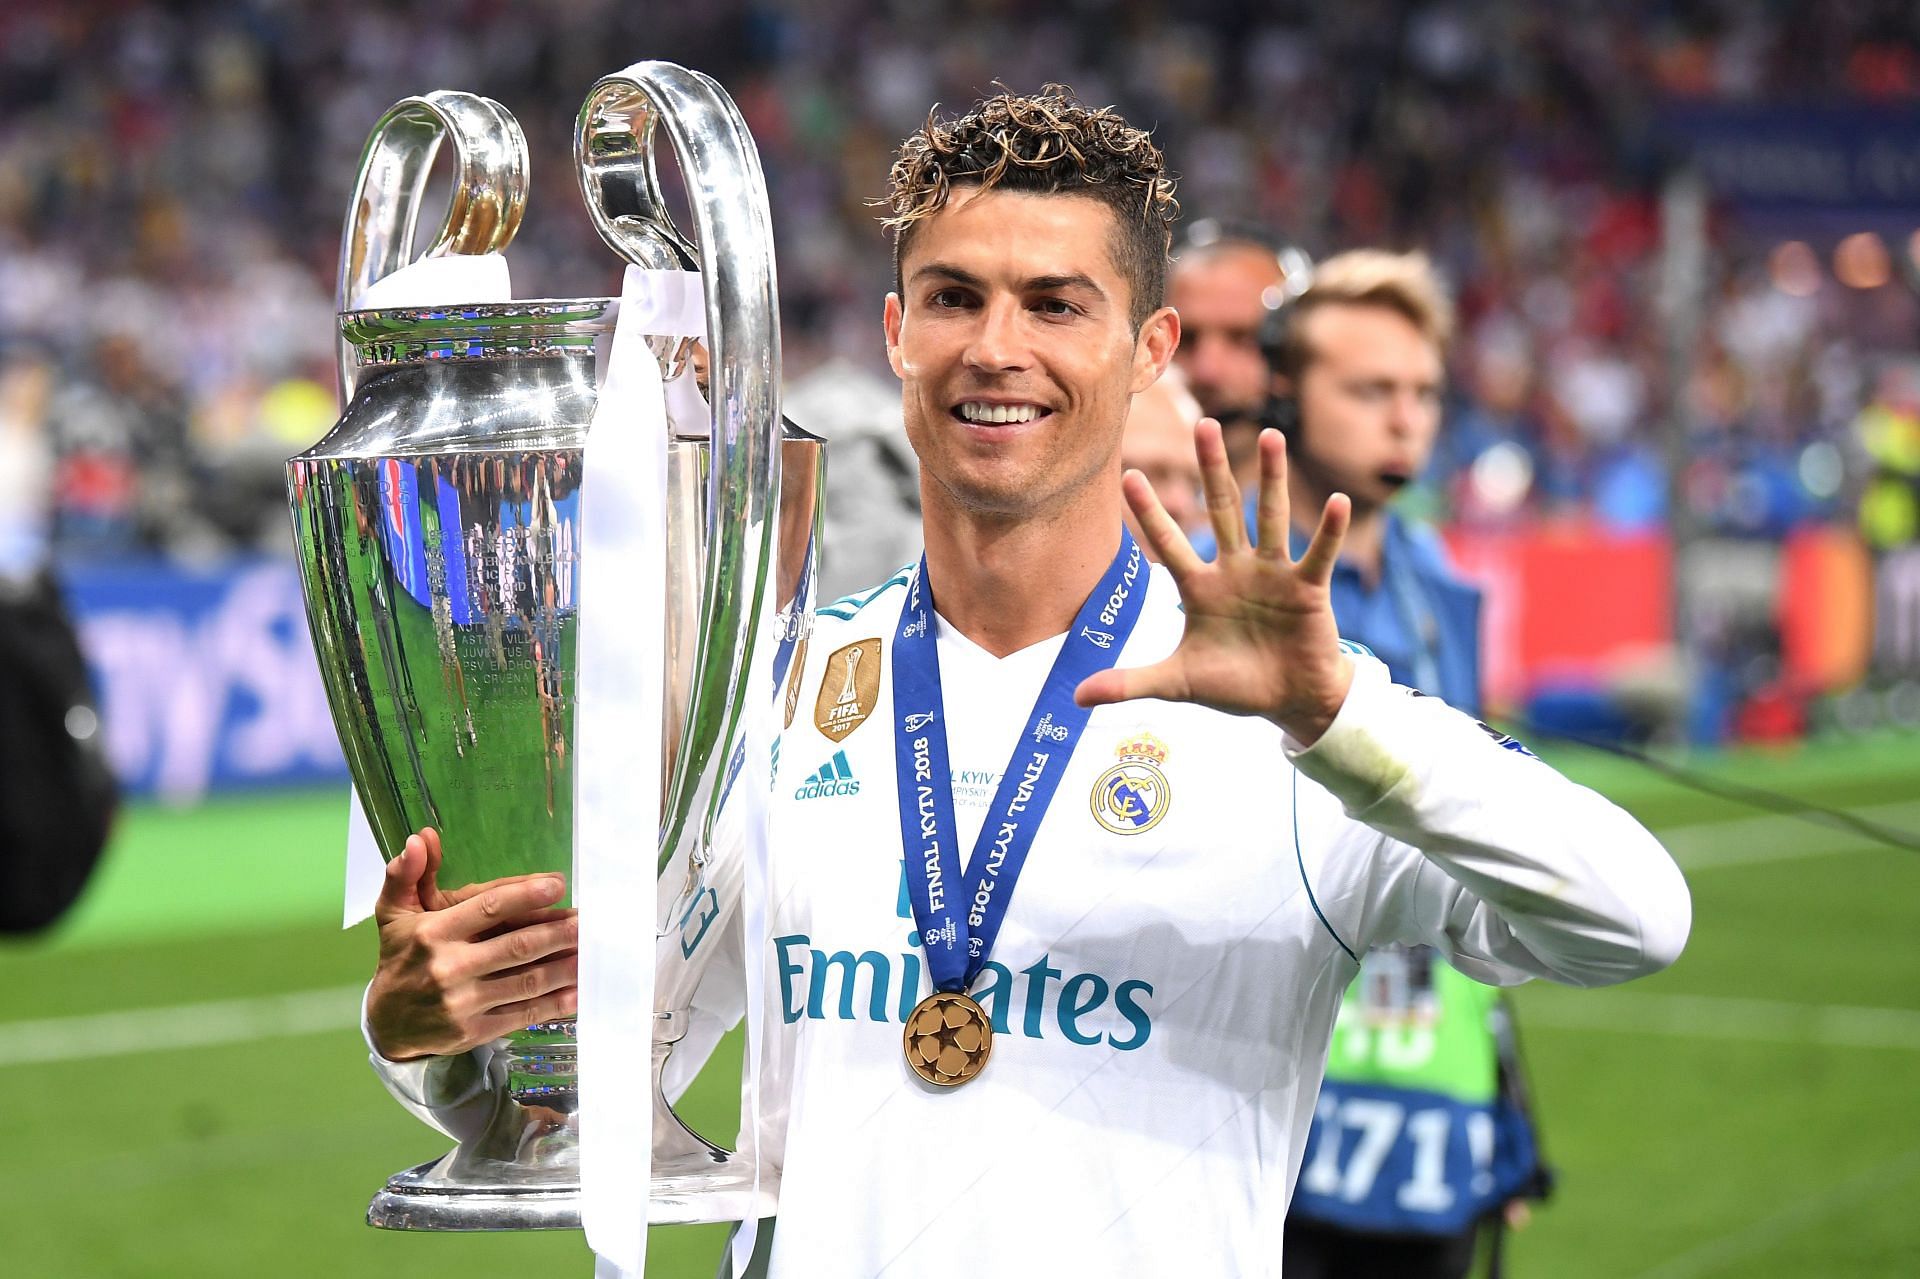 Cristiano Ronaldo has won the tournament five times